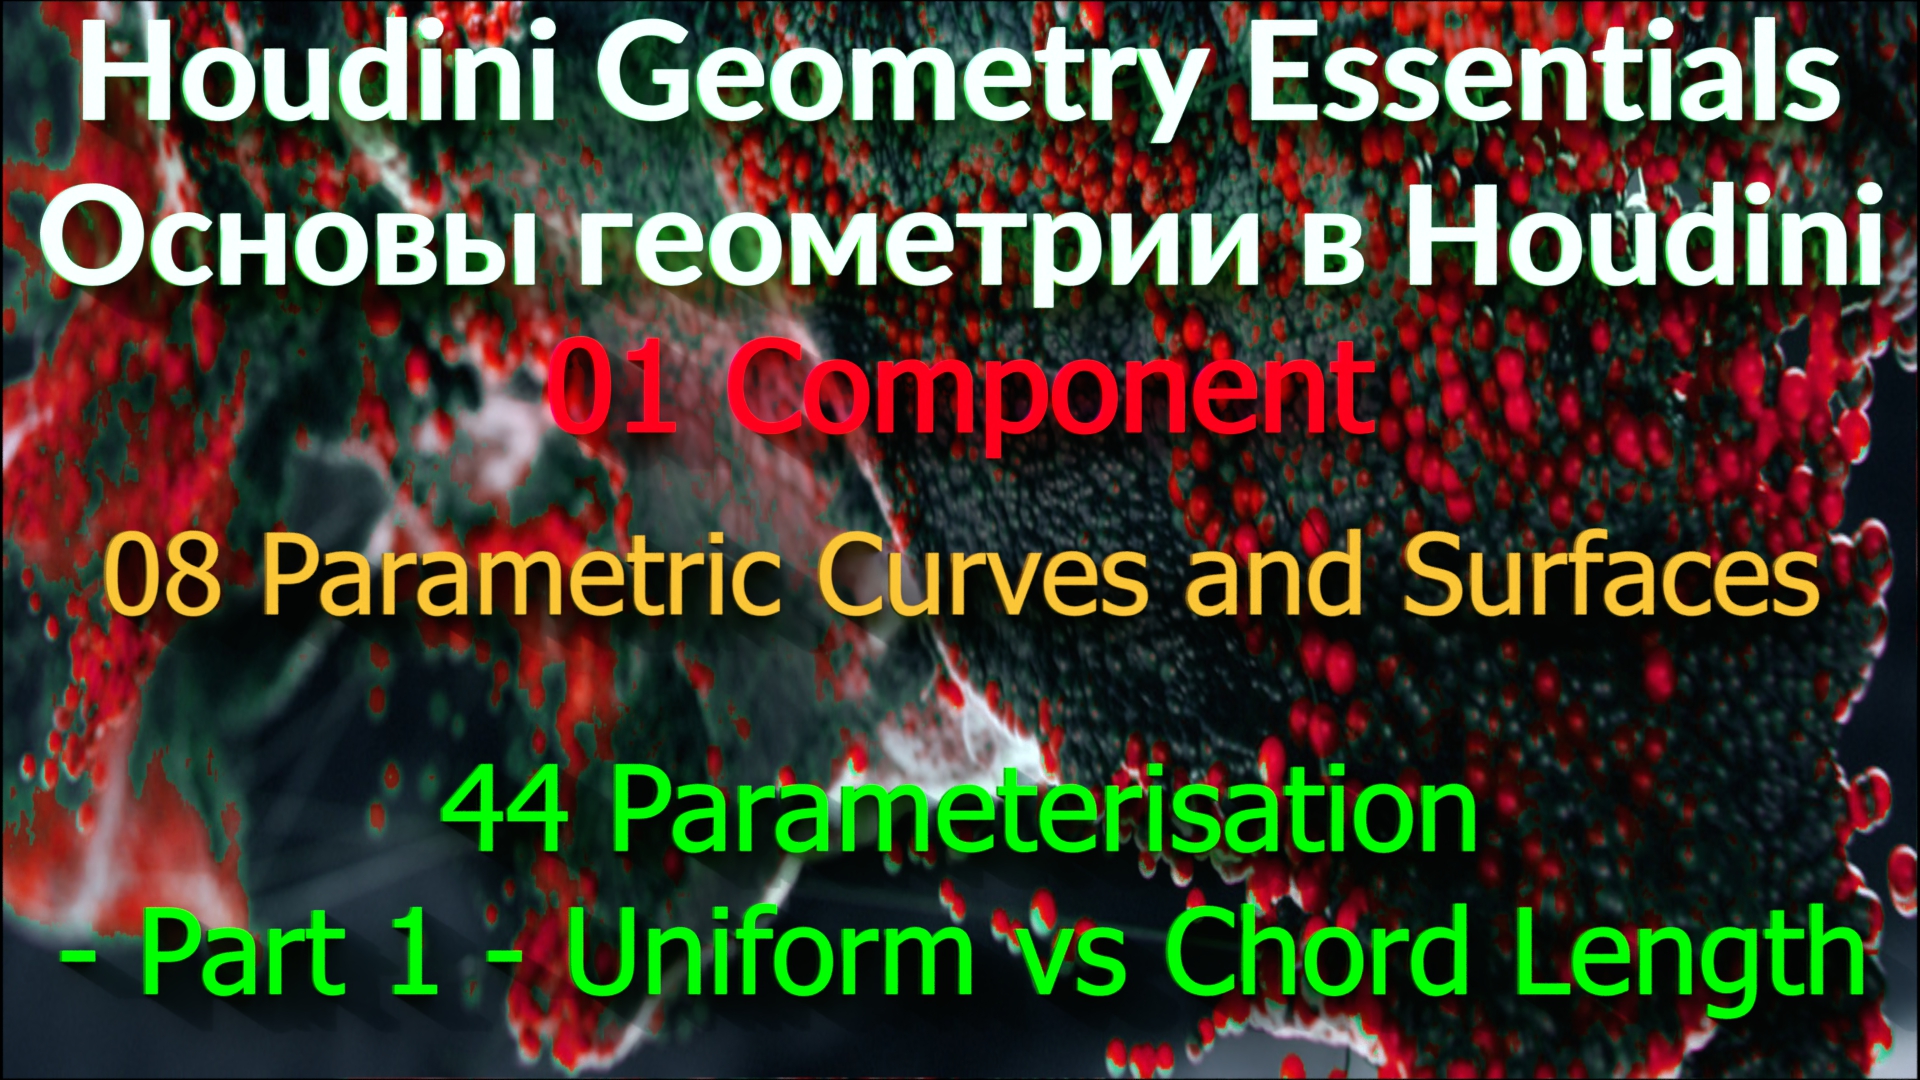 01_08_44. Parameterisation - Part 1 - Uniform vs Chord Length